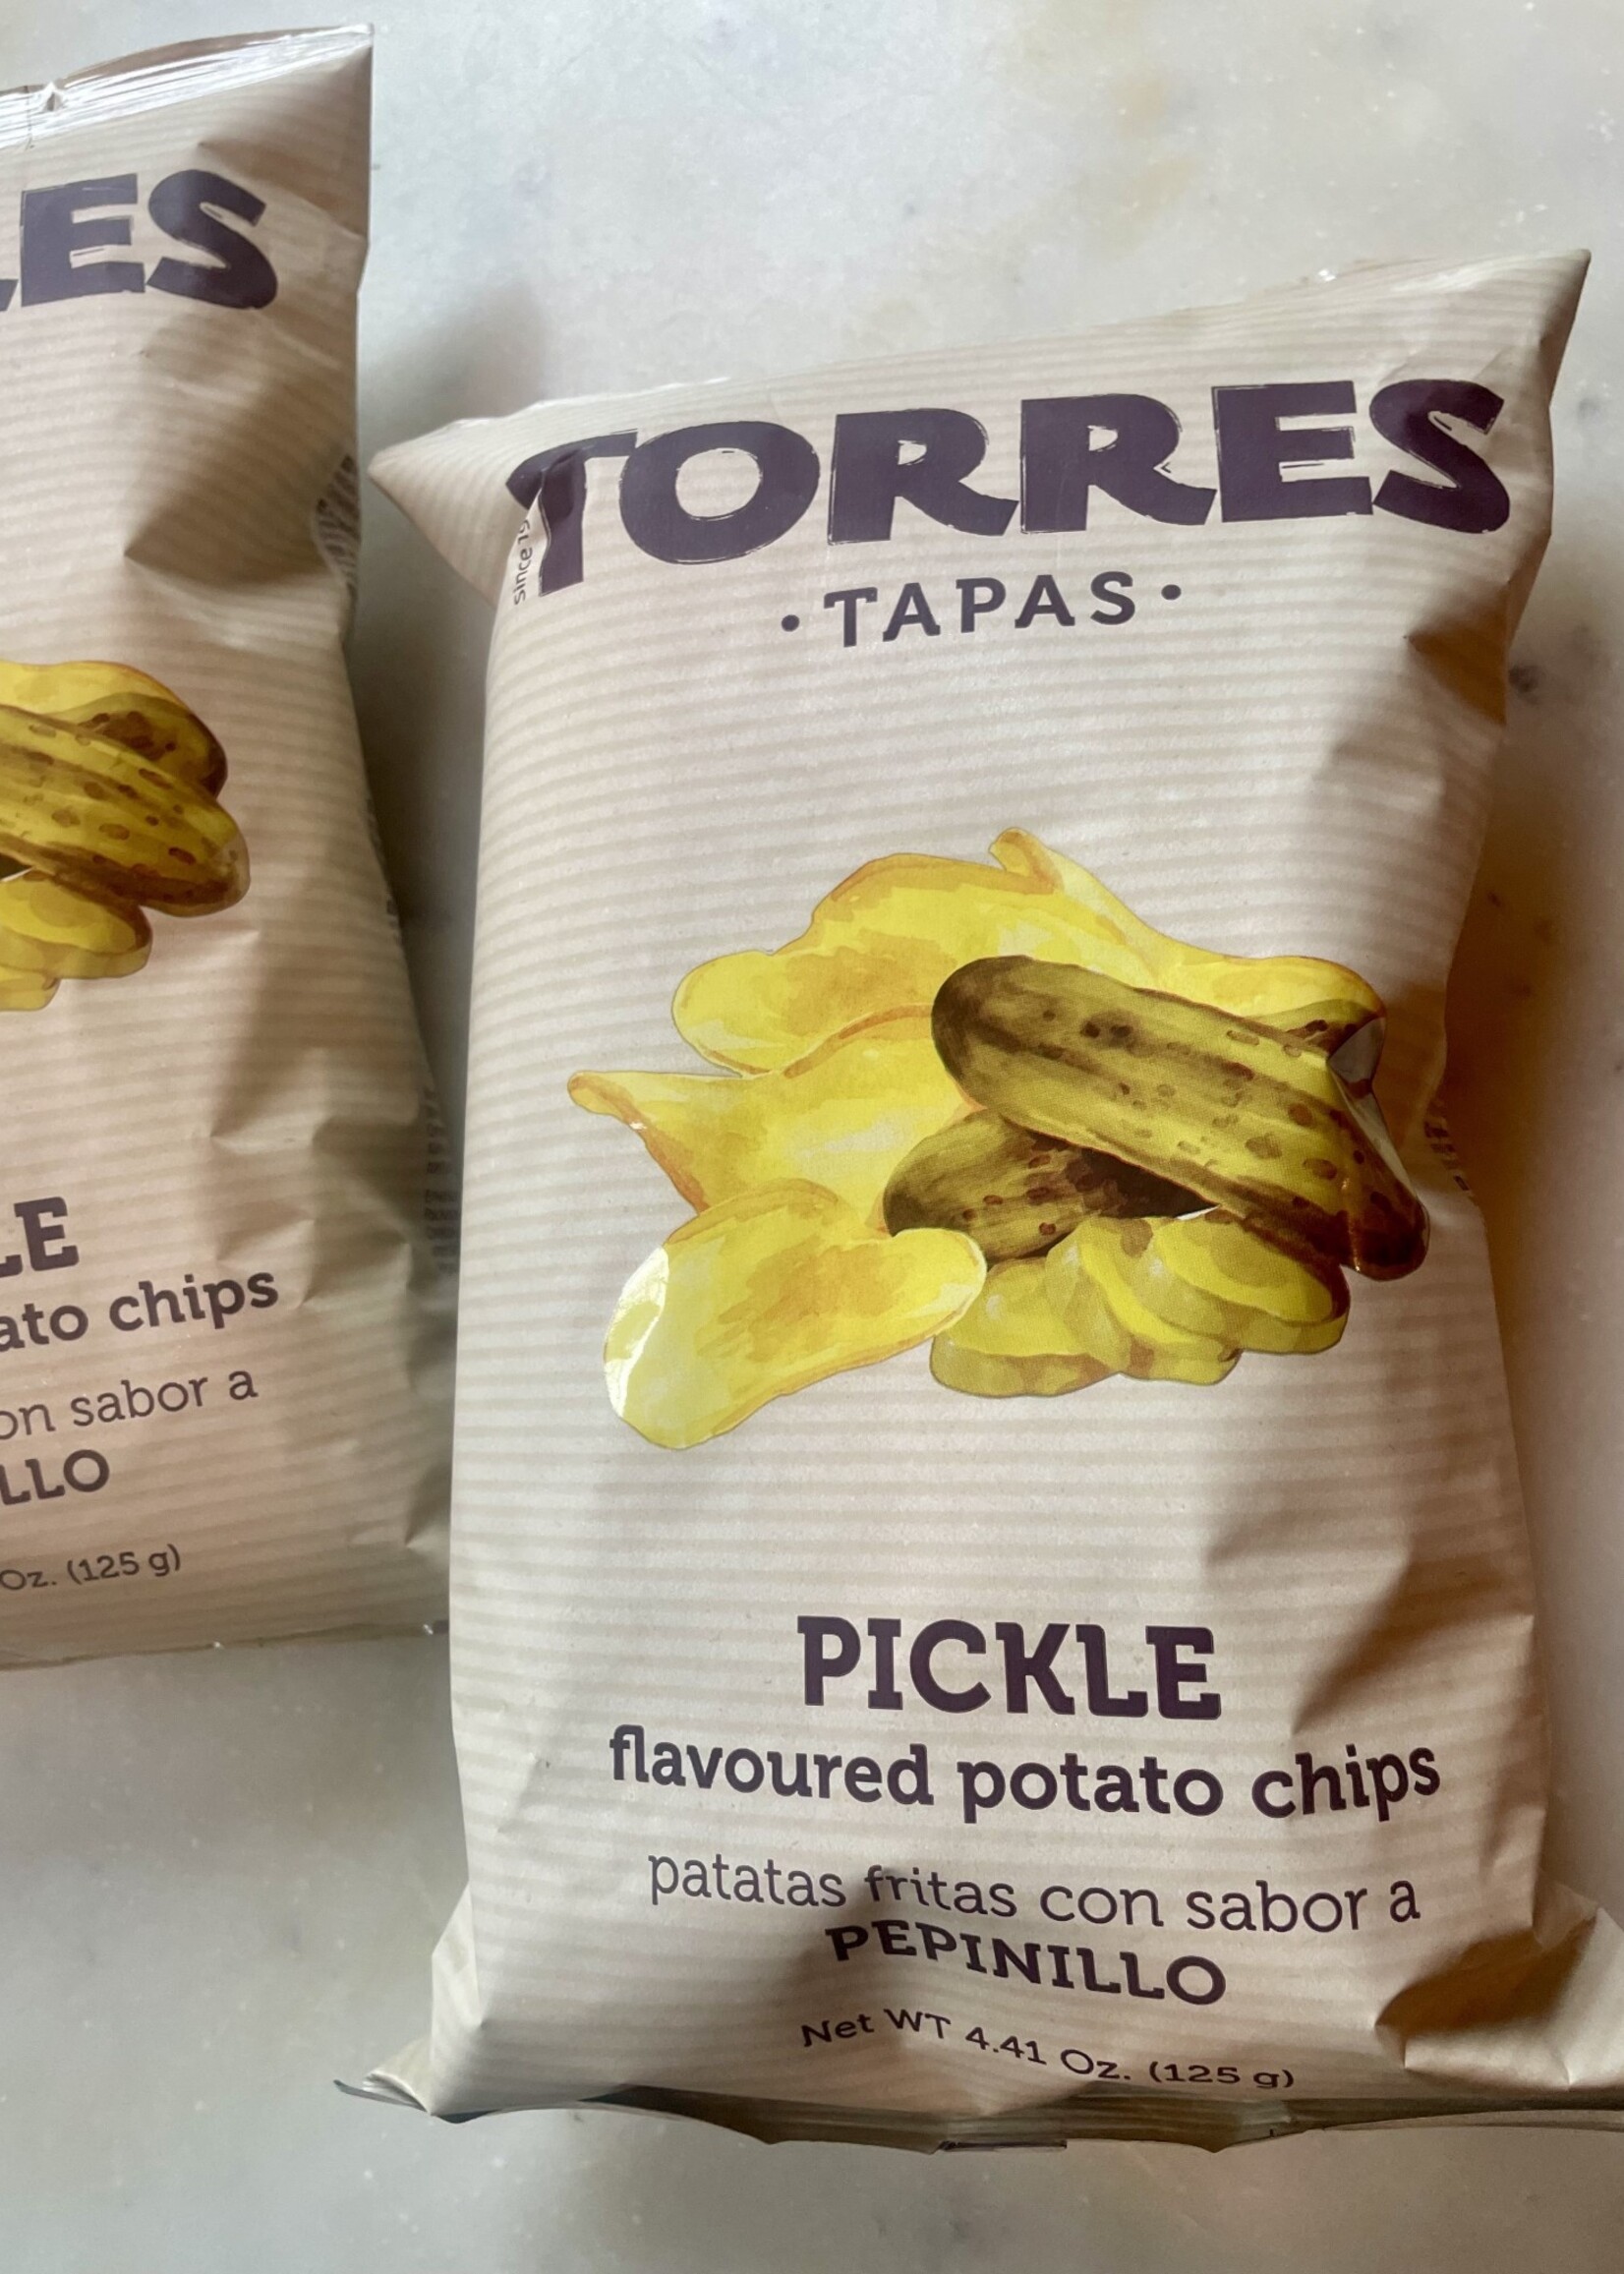 Torres Tapas Pickle Potato Chips Pepinillo 4.41oz 125g